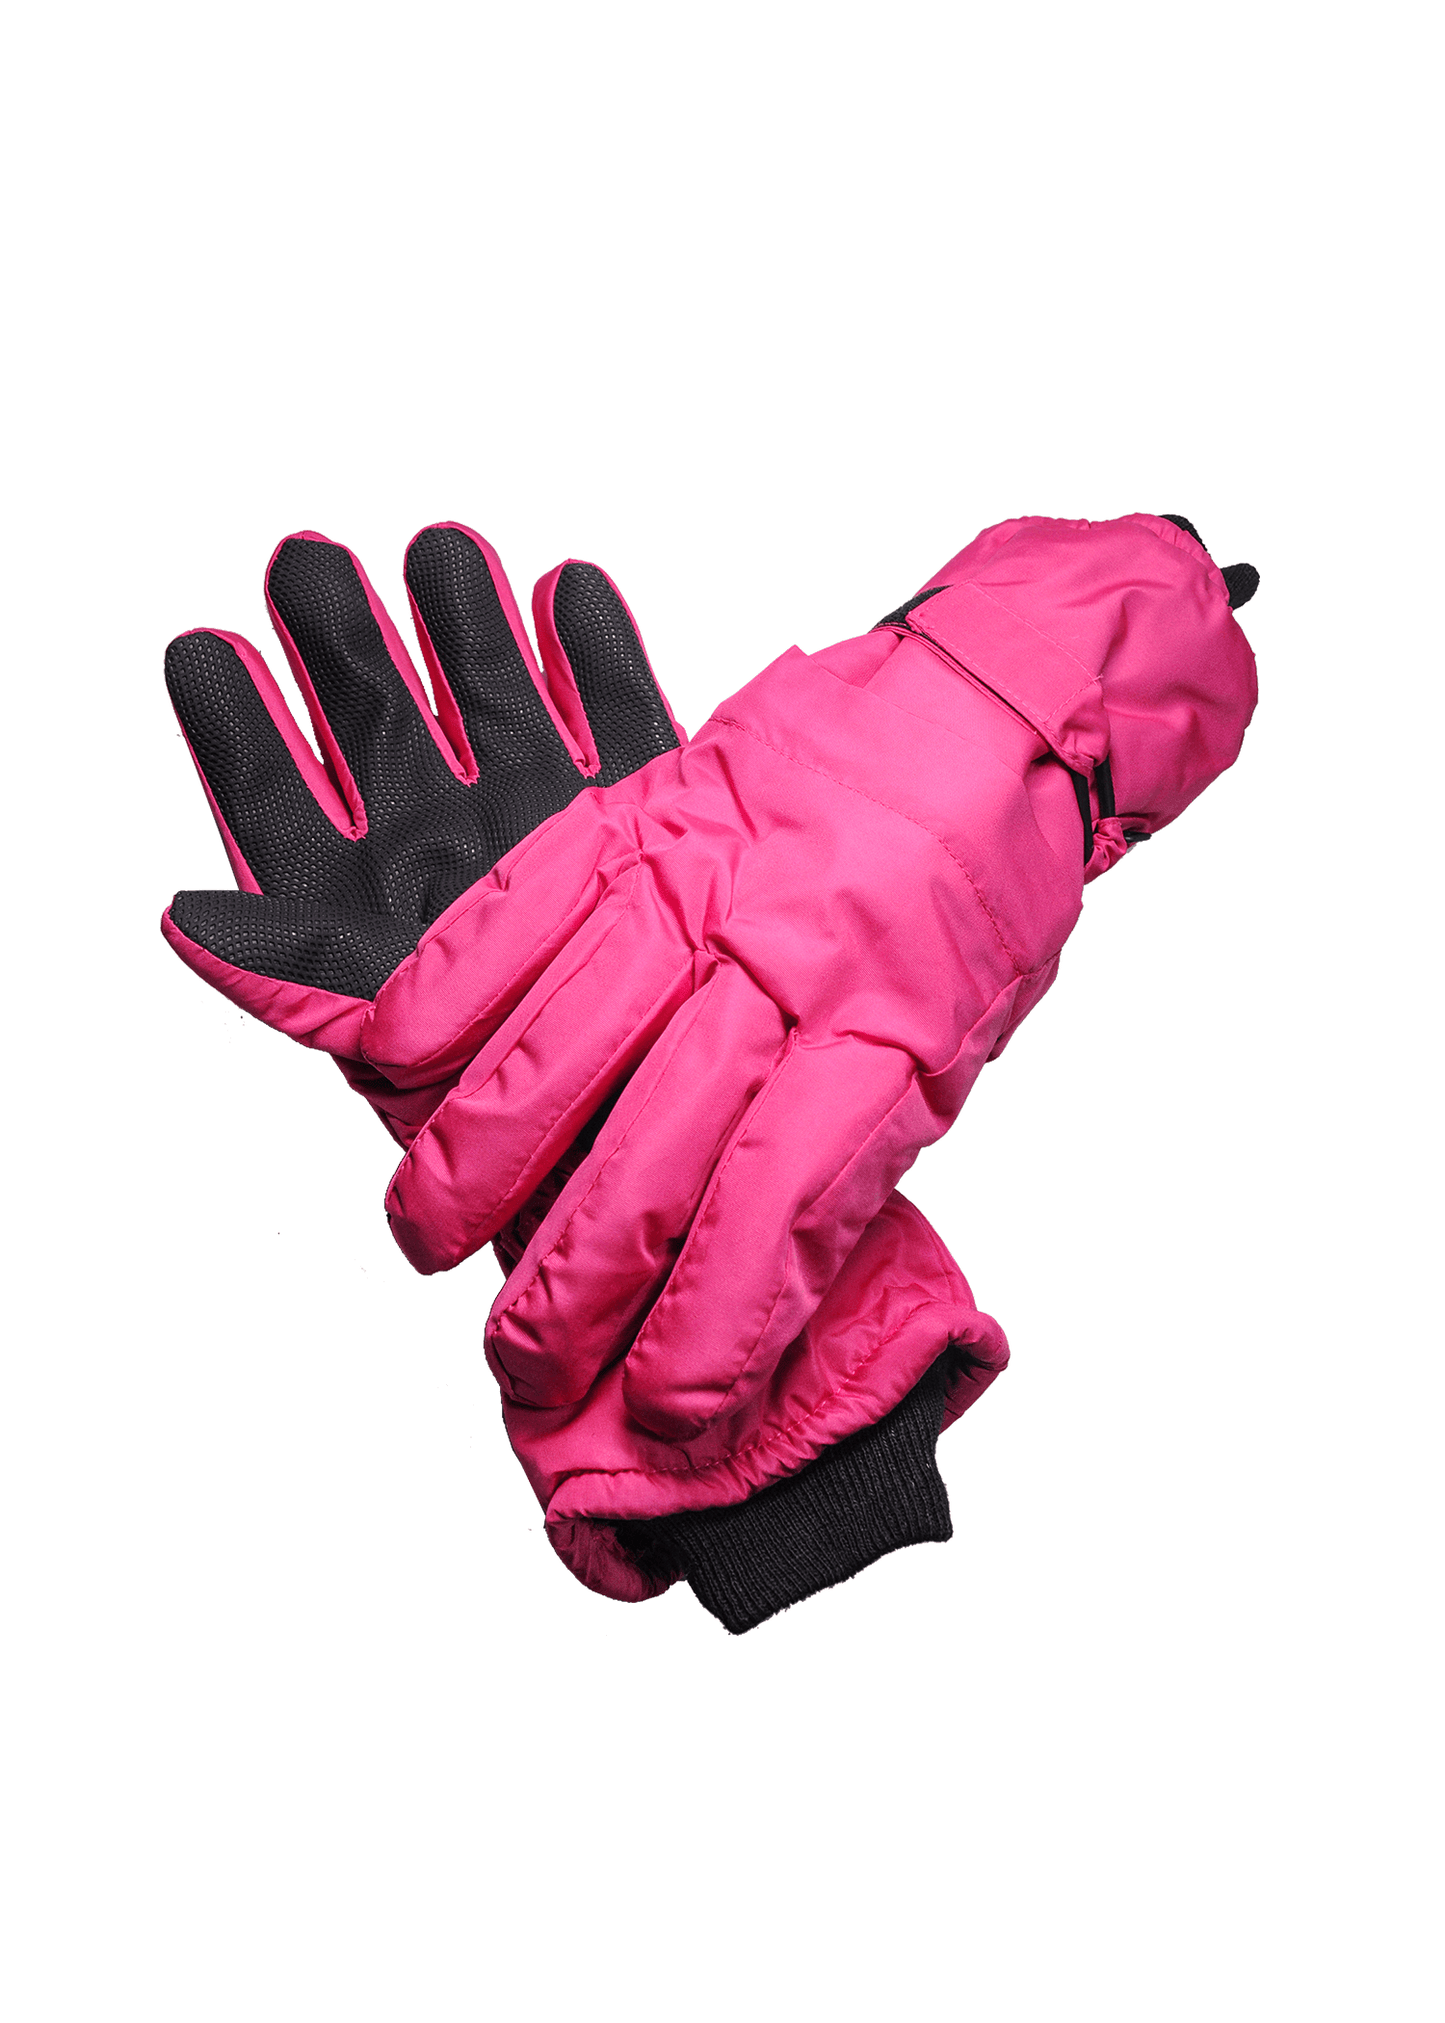 Adult Winter Ski Gloves